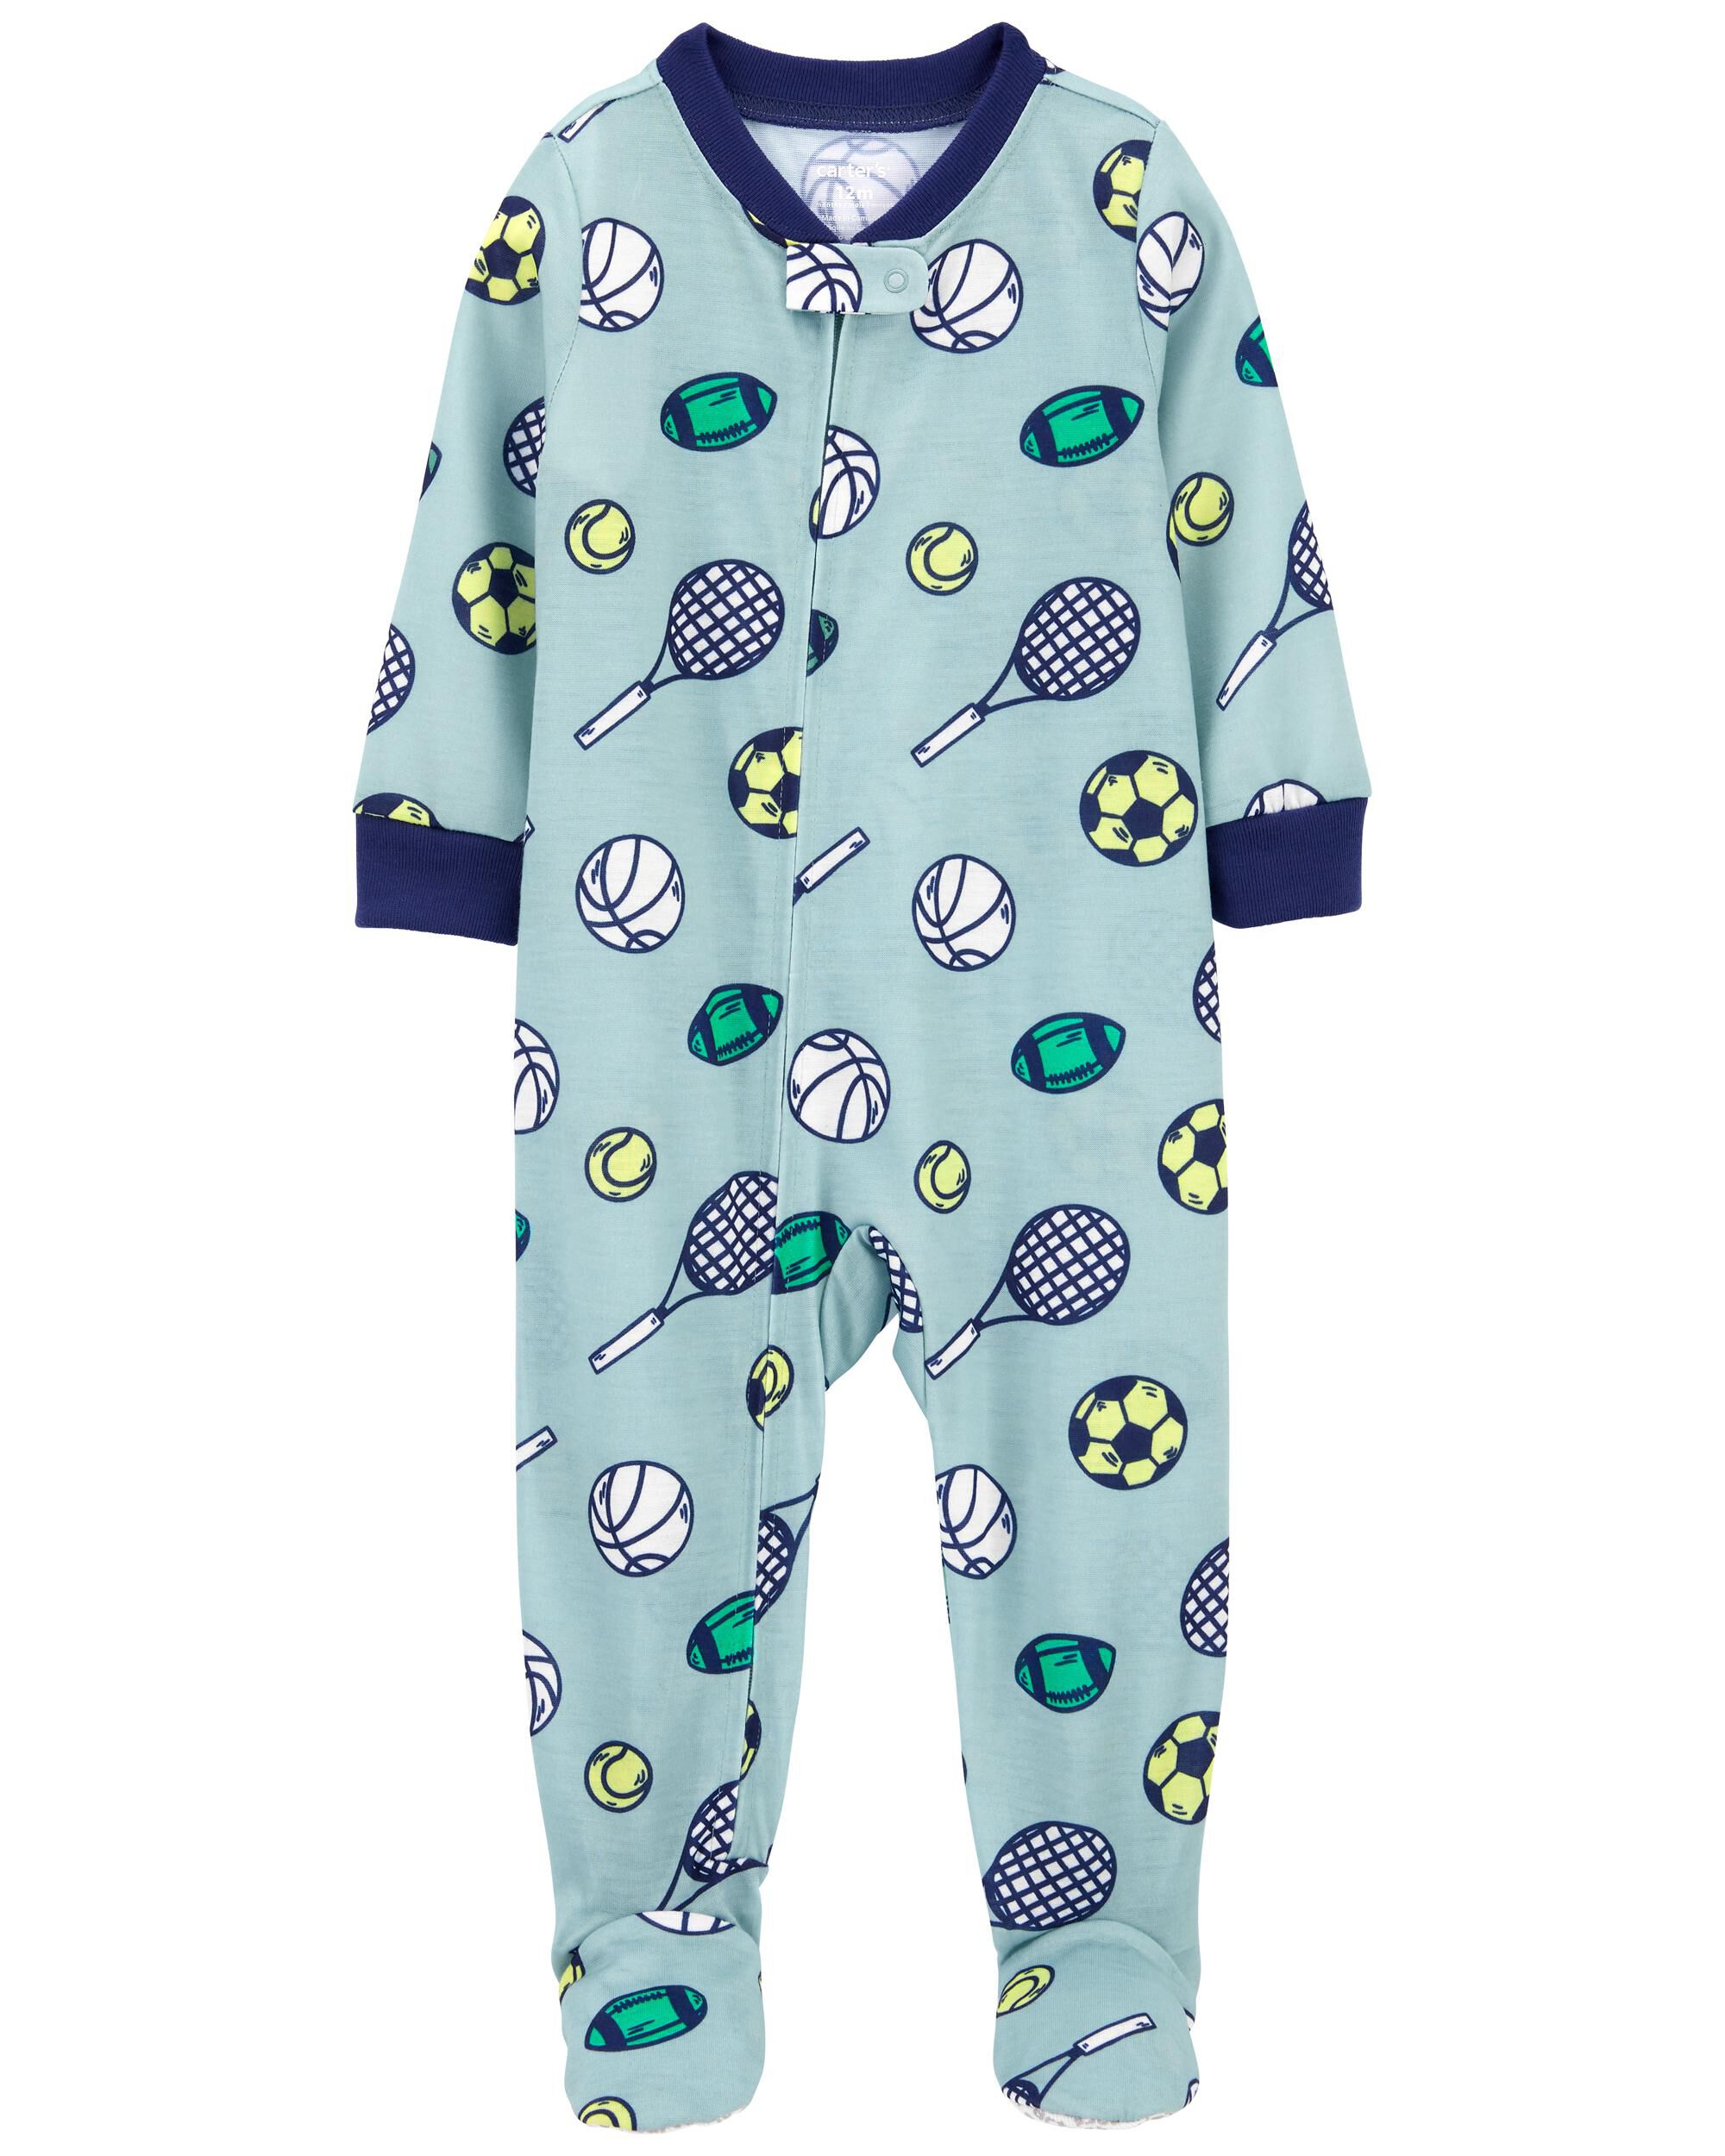 Carters Toddler Boys Fleece Blue Dog Print Footed Pajama Sleeper 